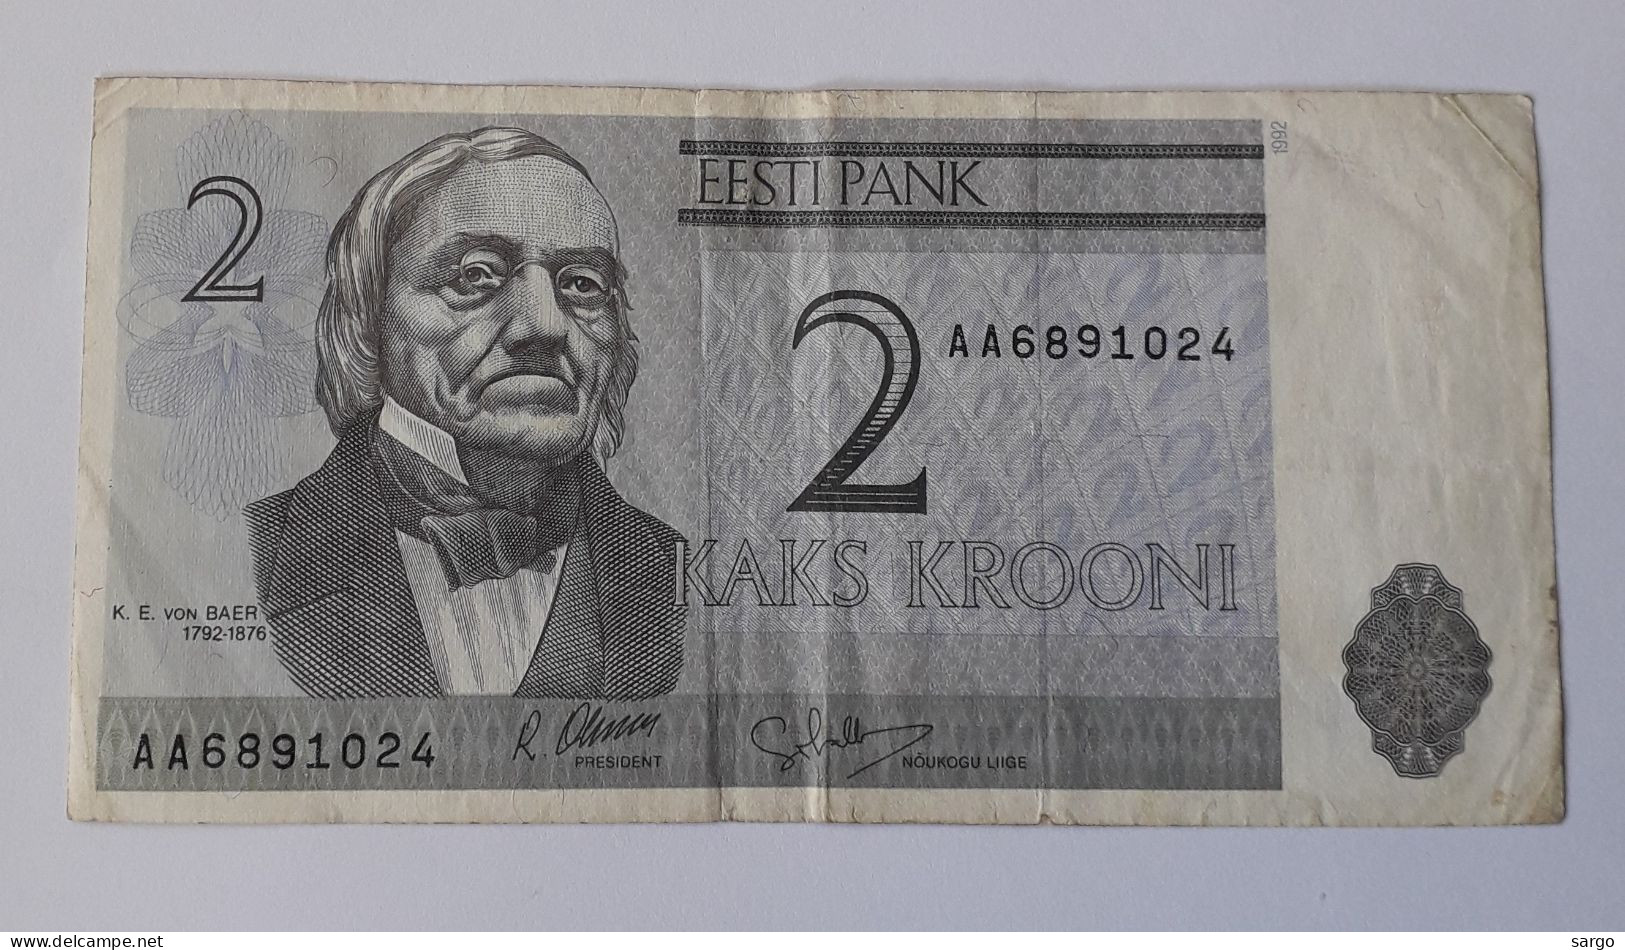 ESTONIA - 2 KROONI -  P 70 - 1992 -  CIRC - BANKNOTES - PAPER MONEY - CARTAMONETA - - Estland